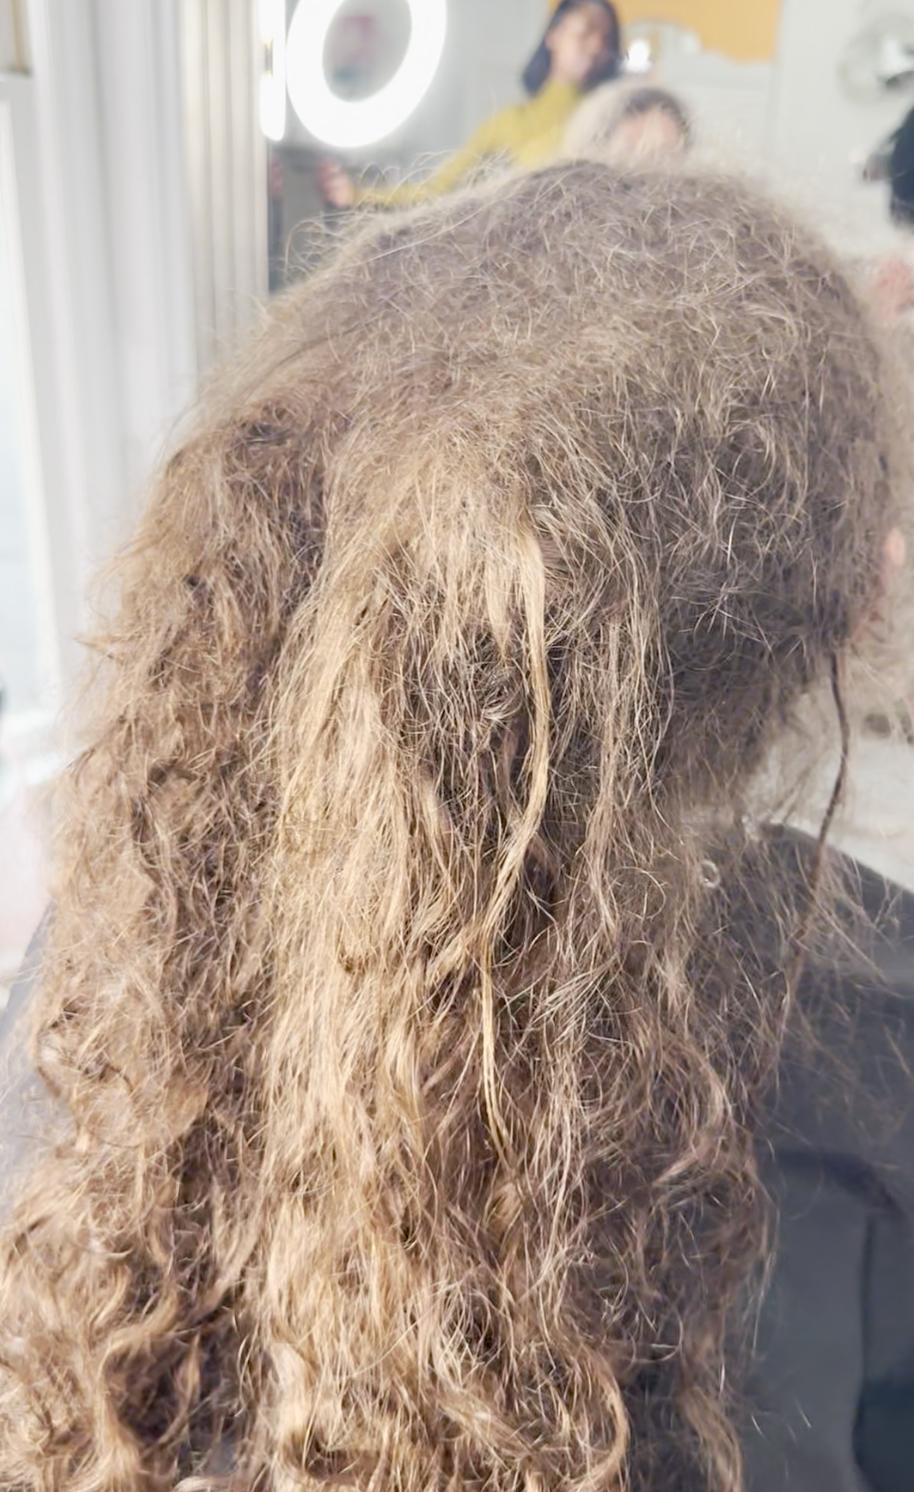 Rebecca's hair before it was detangled. (Courtesy of Leda Fazal/<a href="https://tonehairsalon.com/">Tone Hair Salon</a>)